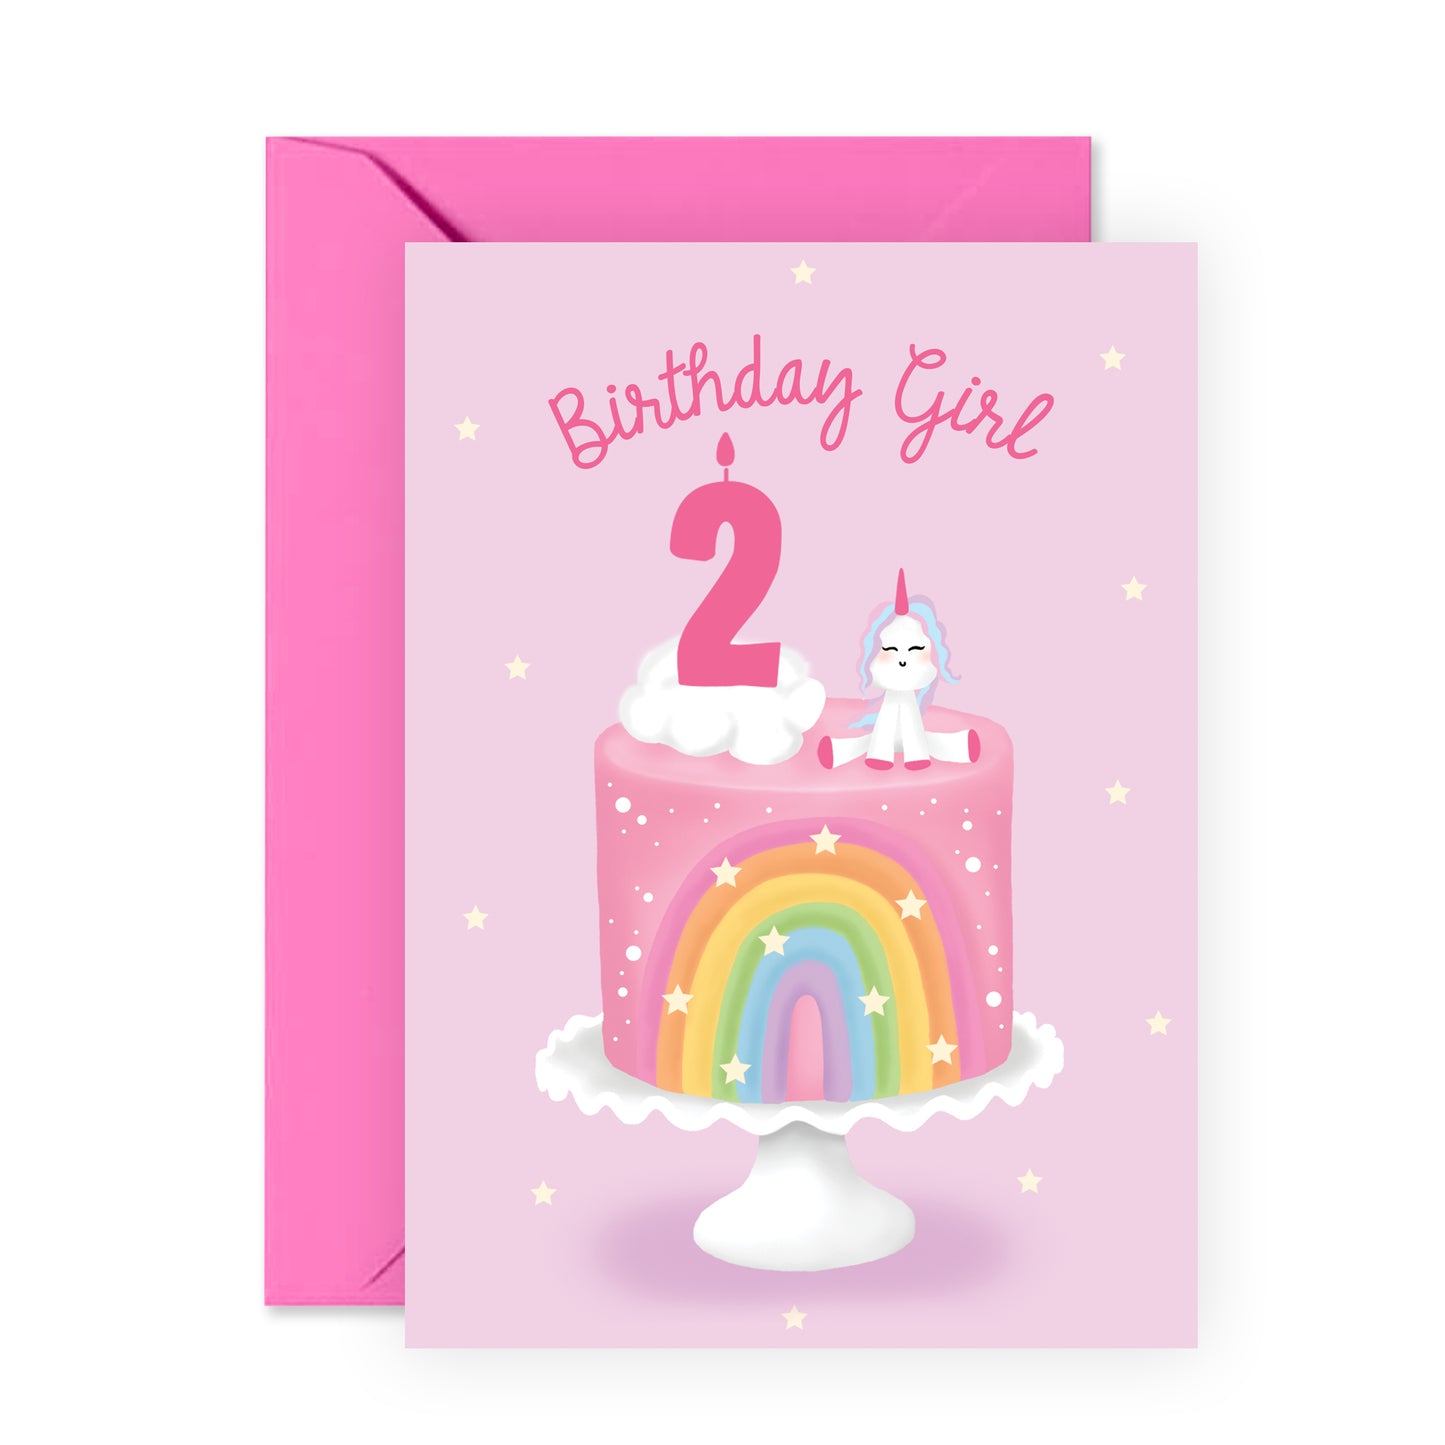 2nd Birthday Card - Birthday Girl 2 Unicorn - For Kids Toddlers